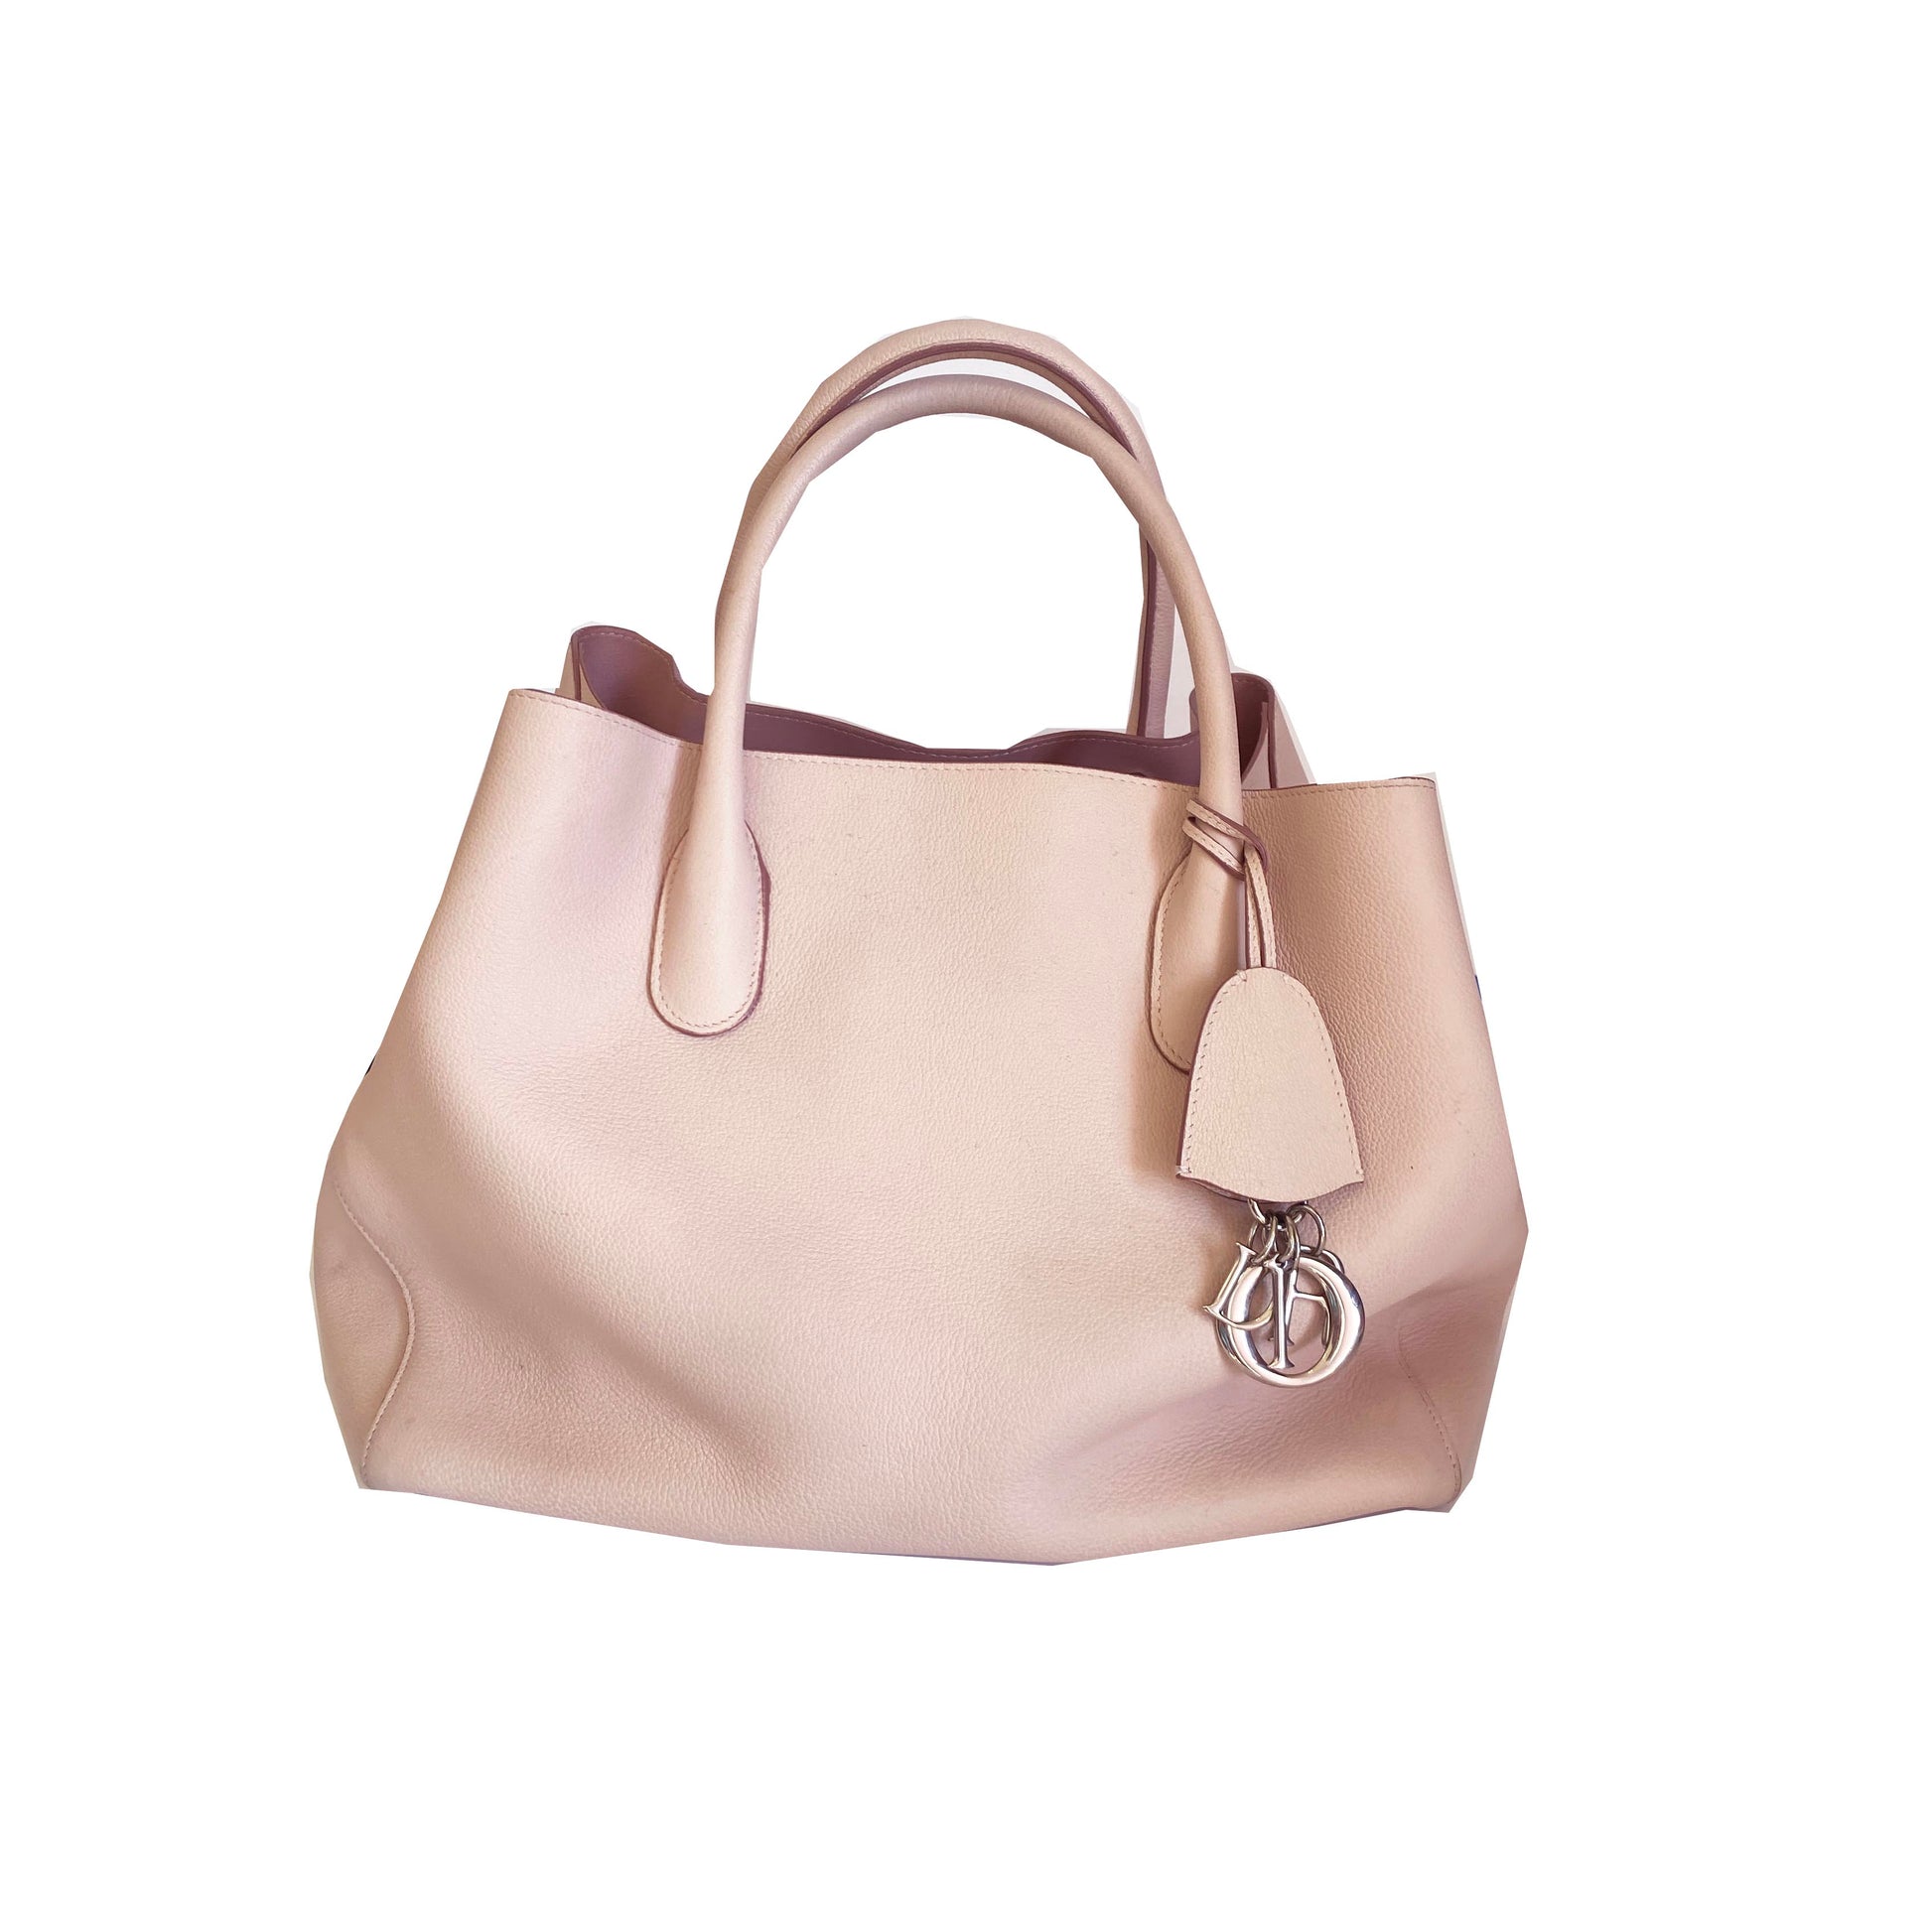 Lady Dior Handbag in Rose Poudre